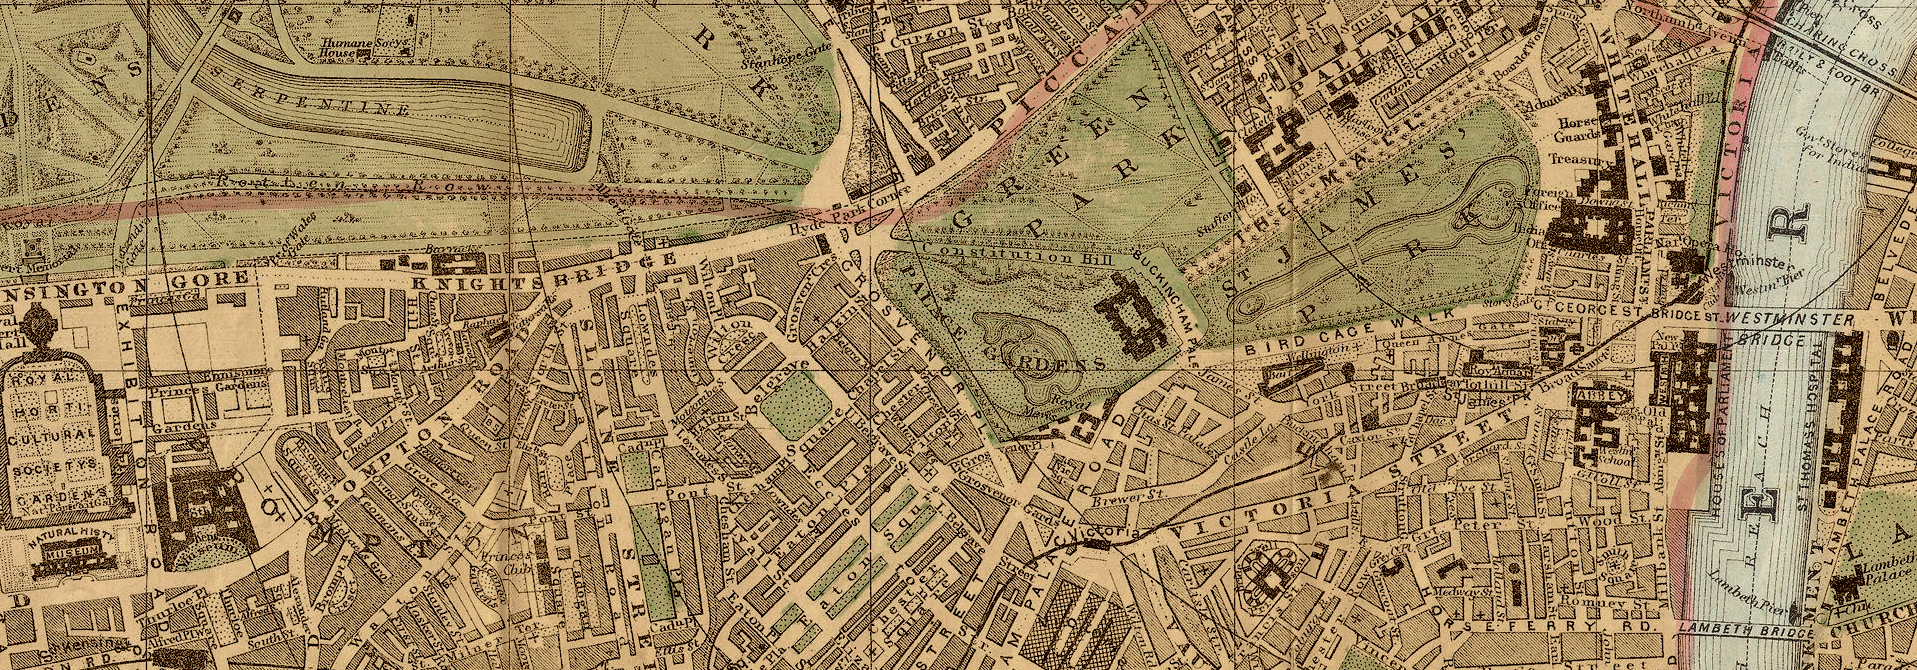 London Majesty Maps And Prints